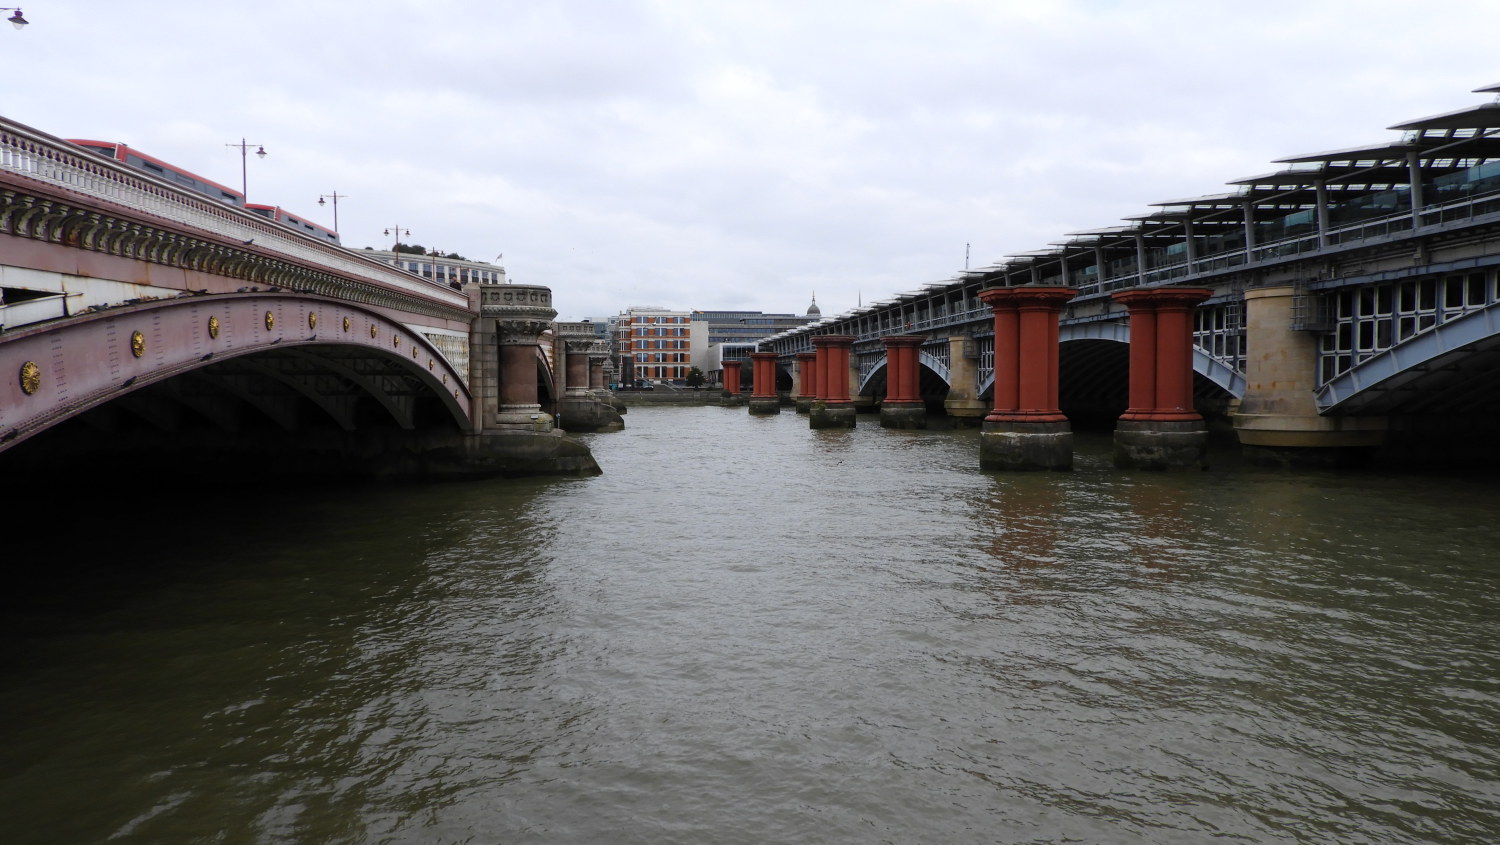 The Blackfriar's Bridges